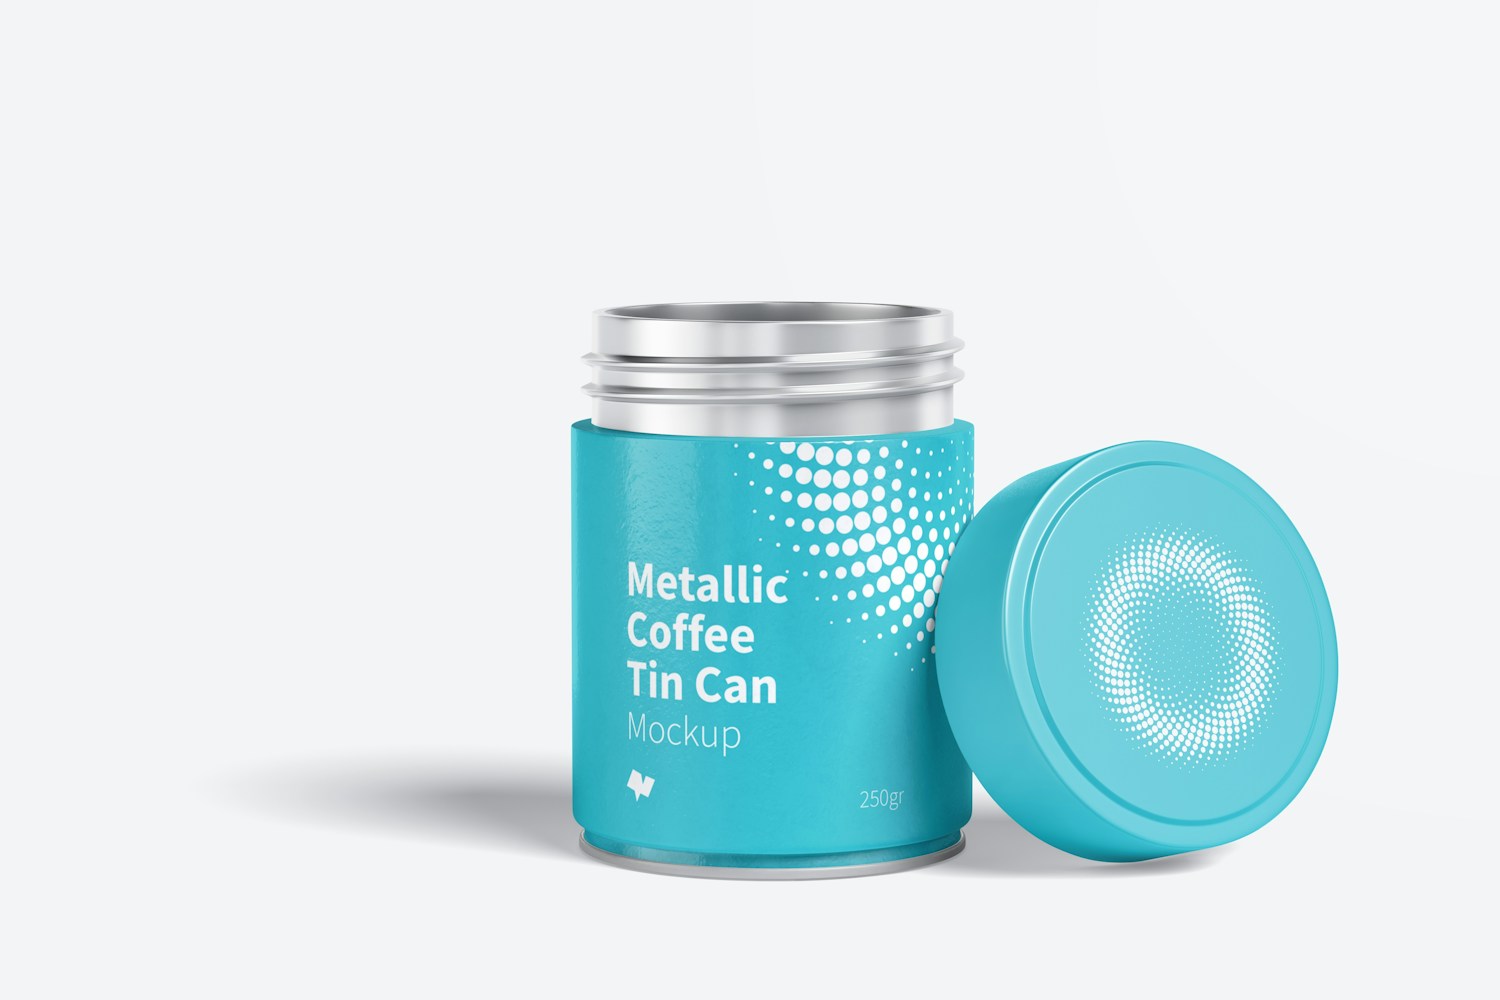 Metallic Coffee Tin Can with Plastic Lid Mockup, Opened